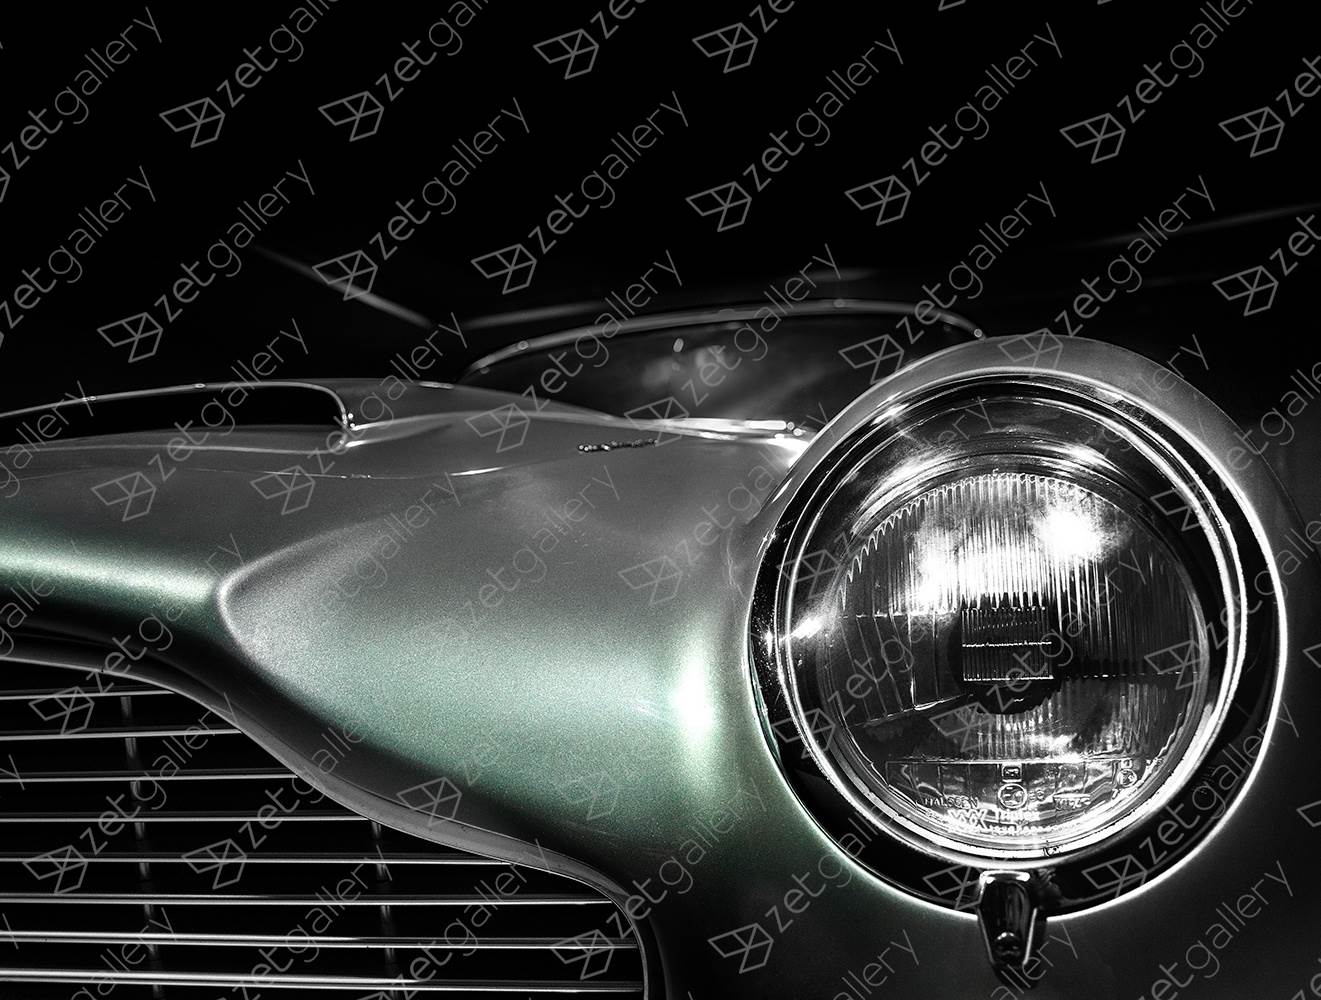 Aston Martin DB6 01, original Avant-Garde Digital Photography by Yggdrasil Art